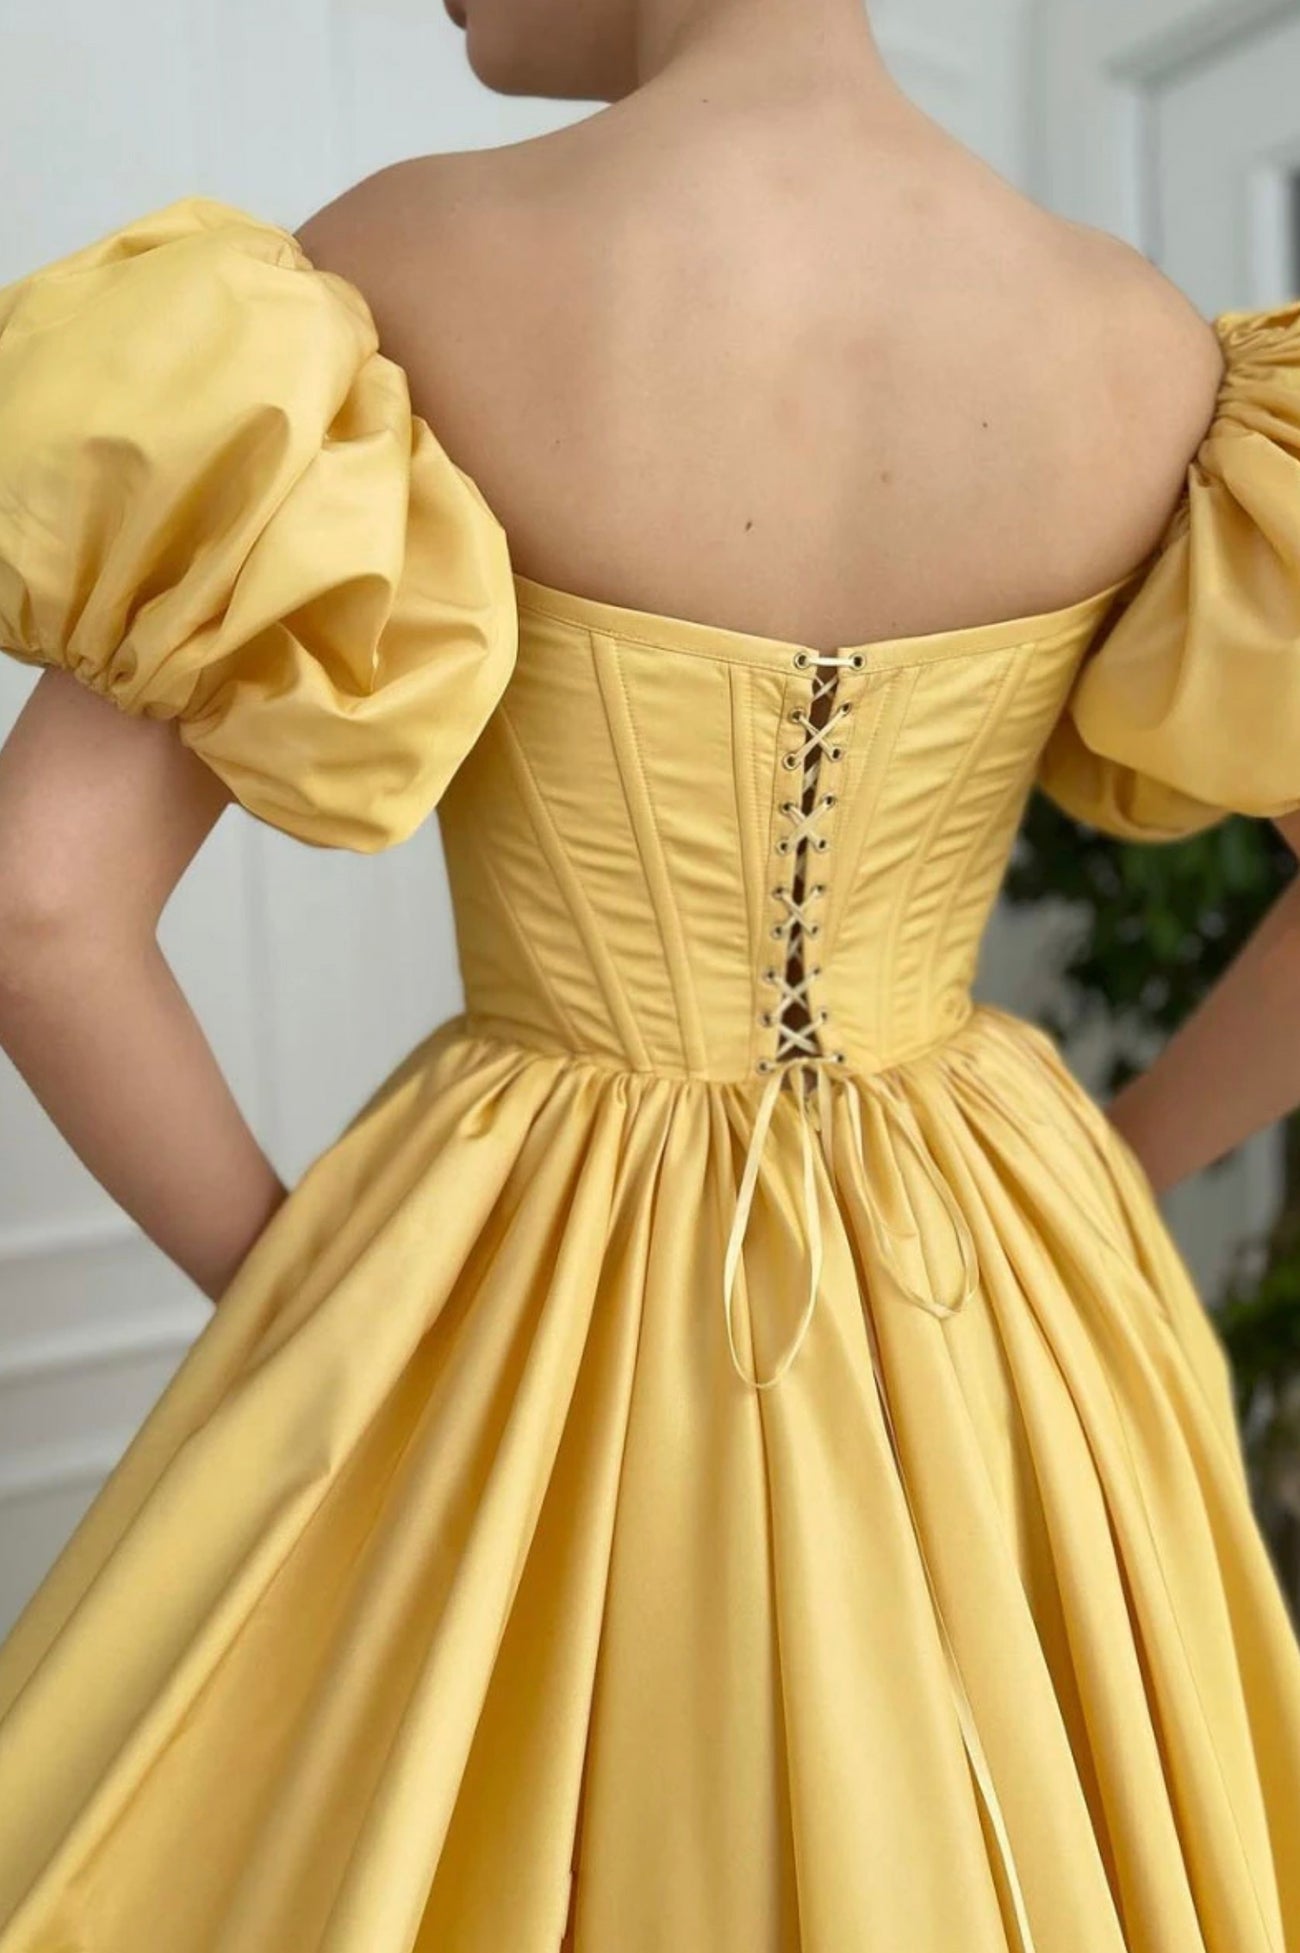 Yellow satin long A line prom dress evening dress